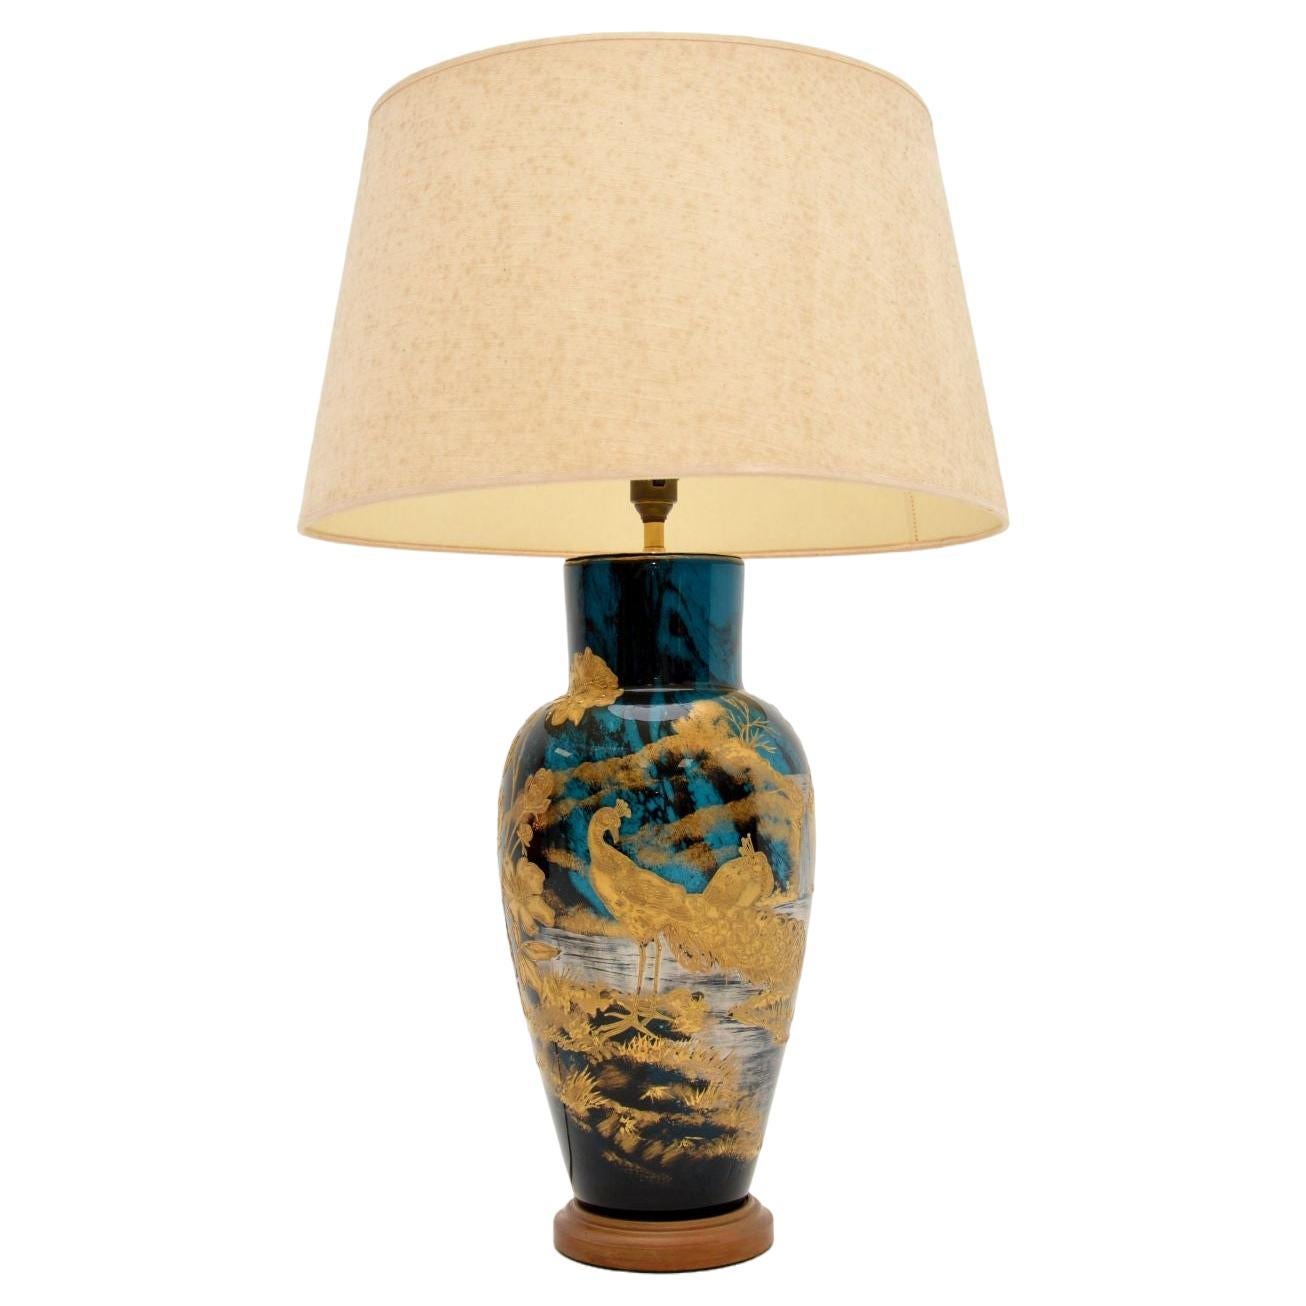 Antique Oriental Style Ceramic Table Lamp